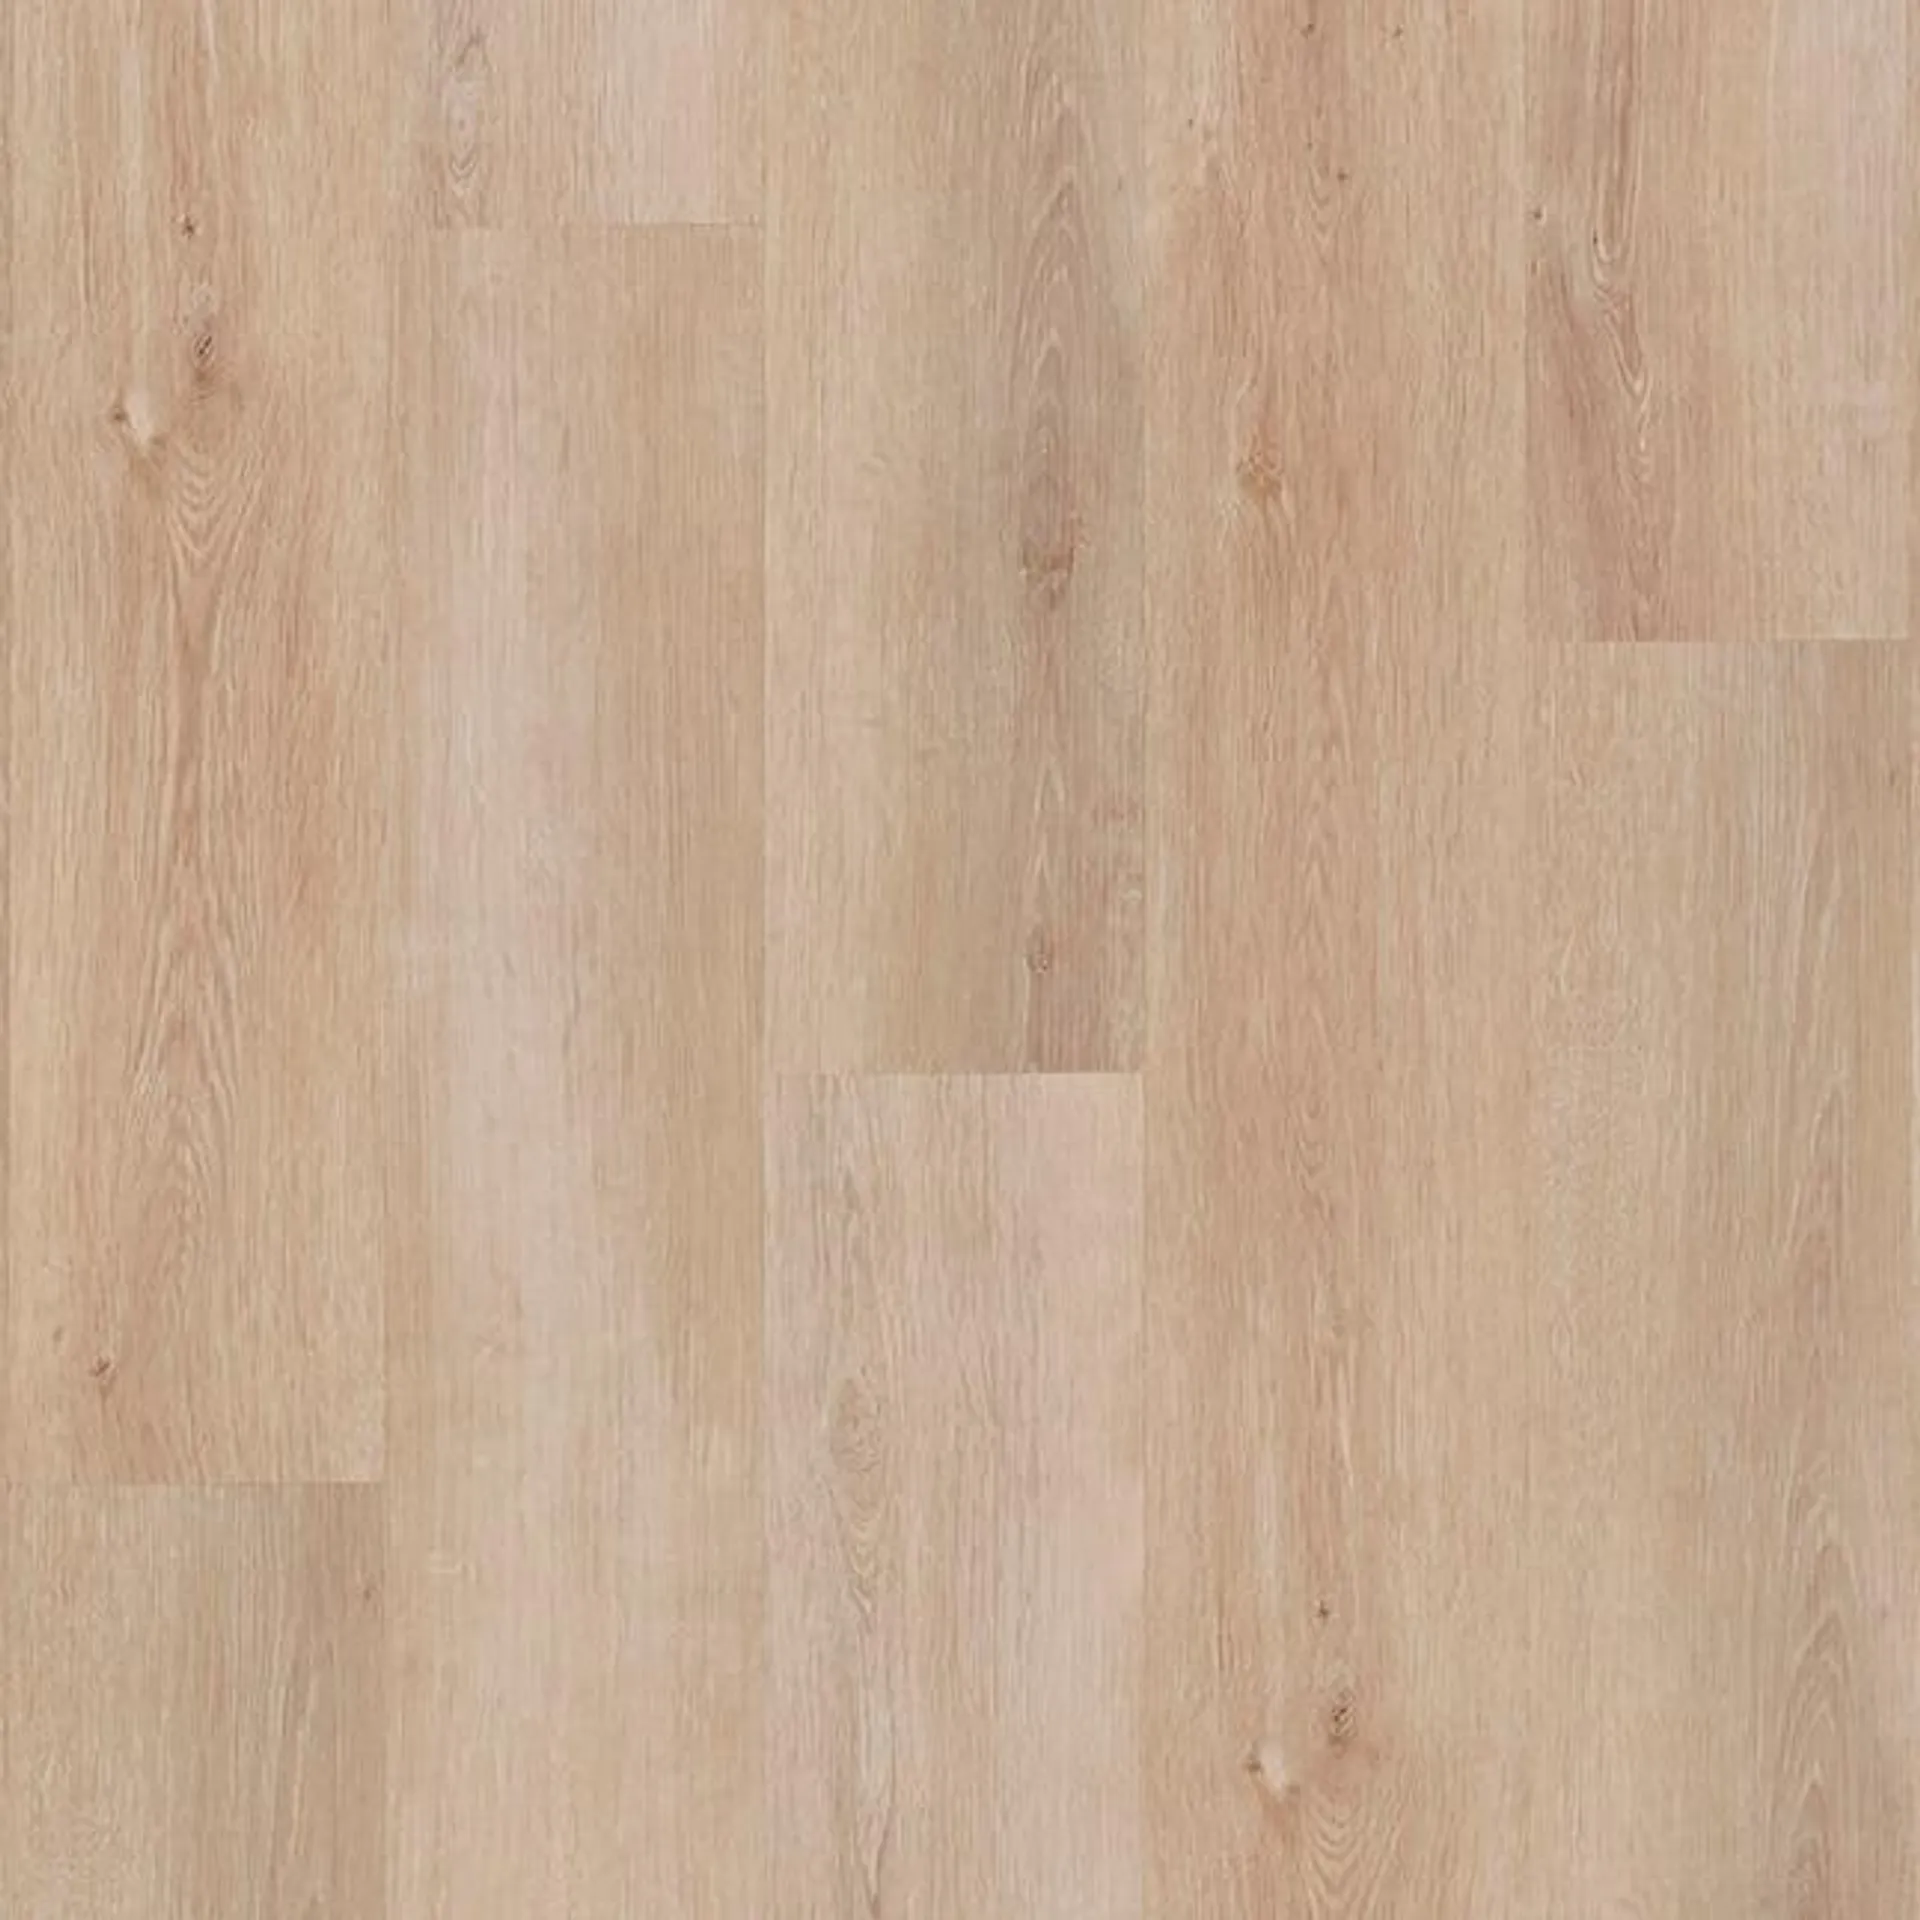 STAINMASTER Austen Oak 12-mil x 7-3/32-in W x 47-in L Waterproof Interlocking Luxury Vinyl Plank Flooring (17.33-sq ft/ Carton)